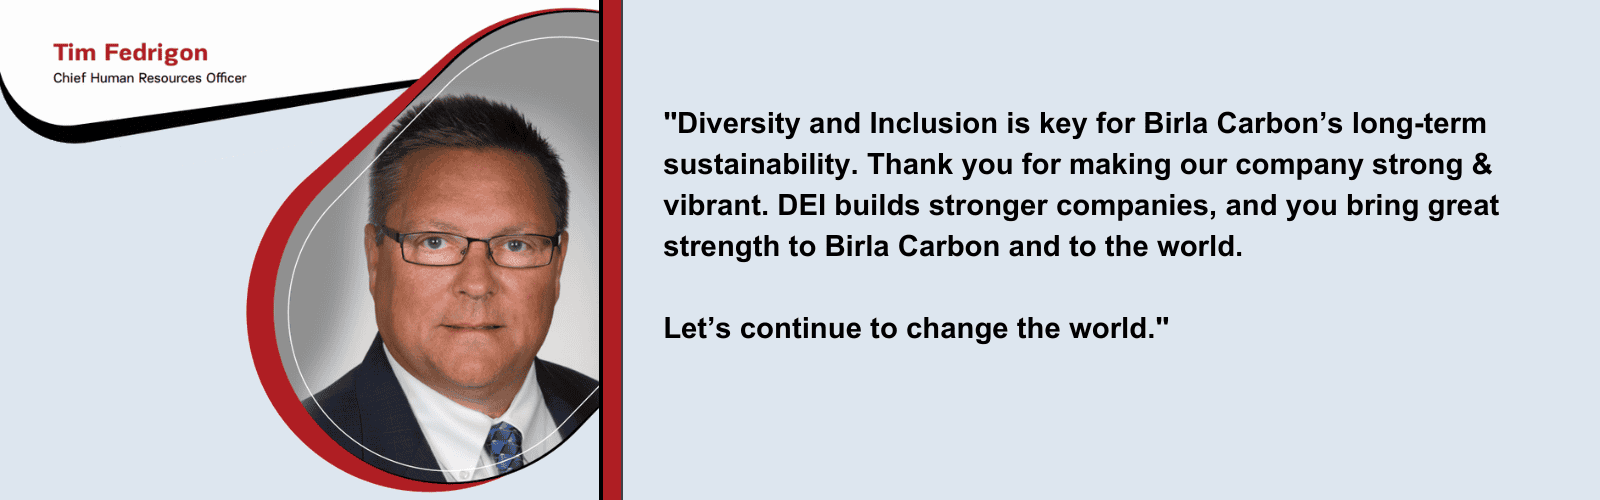 Birla Carbon Tim Fedrigon Leadership Quote